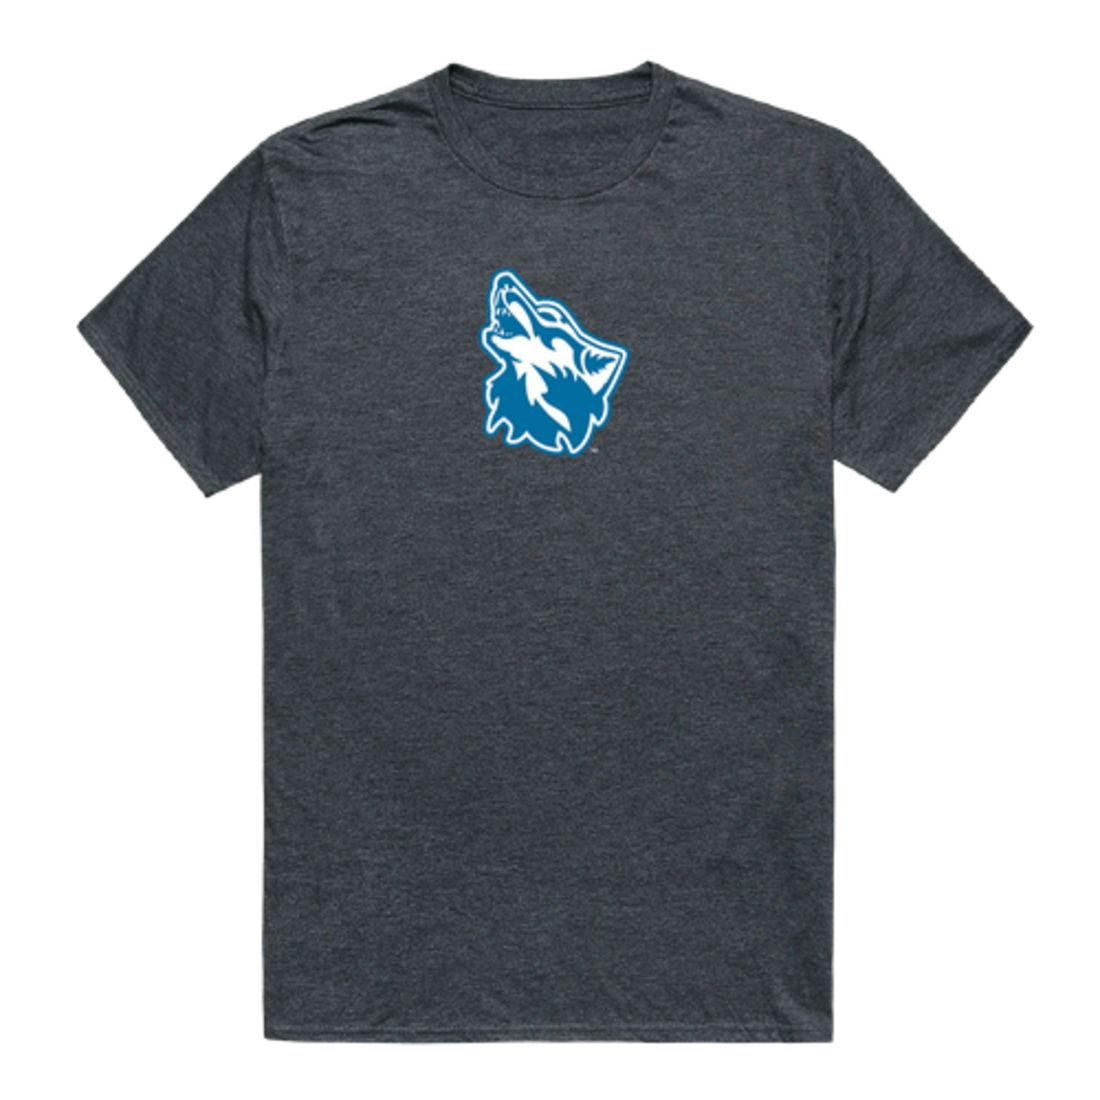 Cheyney University of Pennsylvania Wolves Cinder T-Shirt Tee